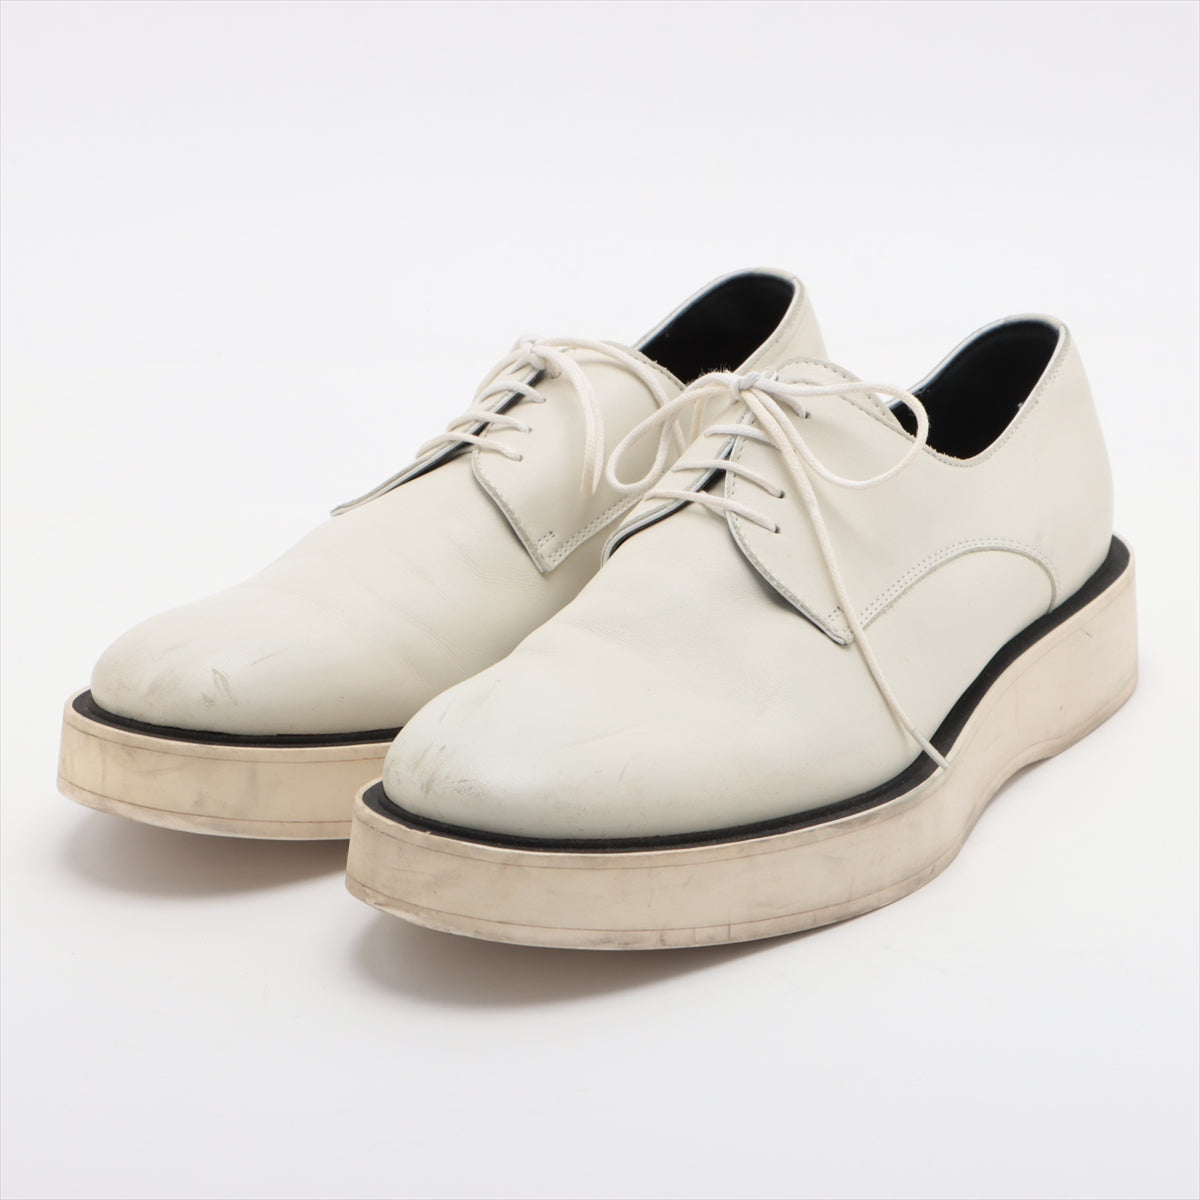 Bottega Veneta Leather Leather shoes 40 Men's White